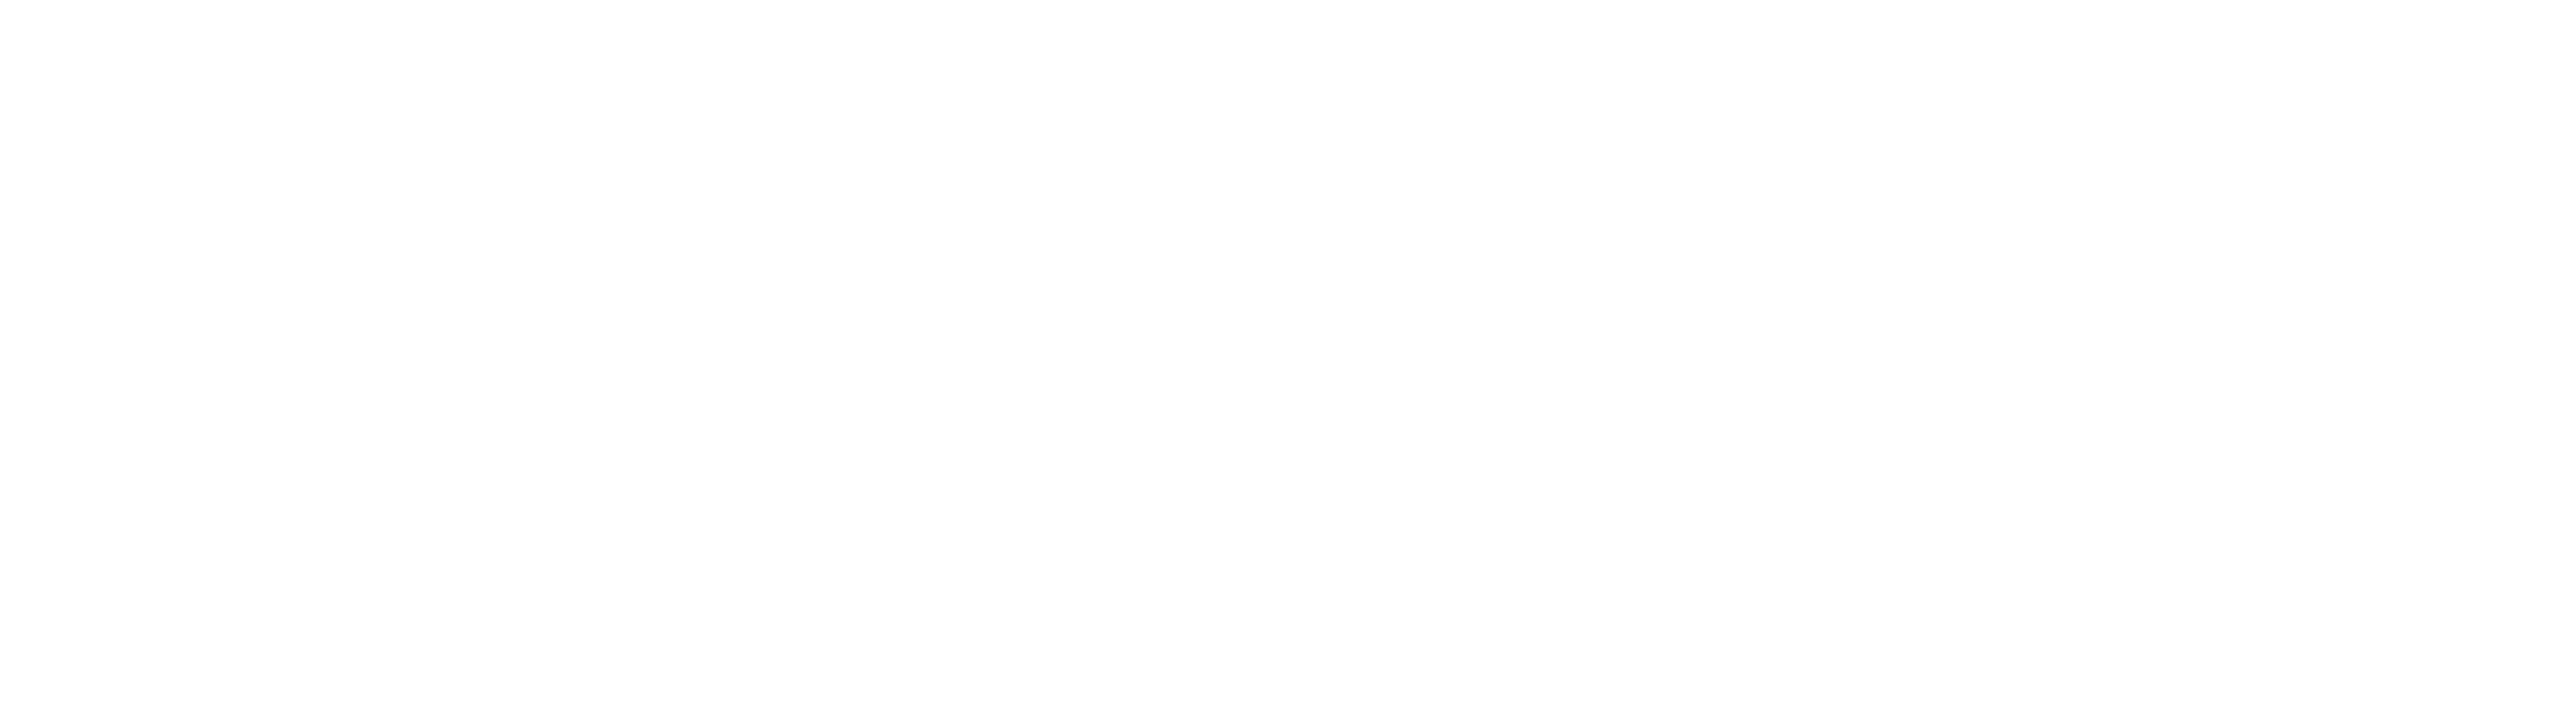 Logotipo Jumbocopy blanco